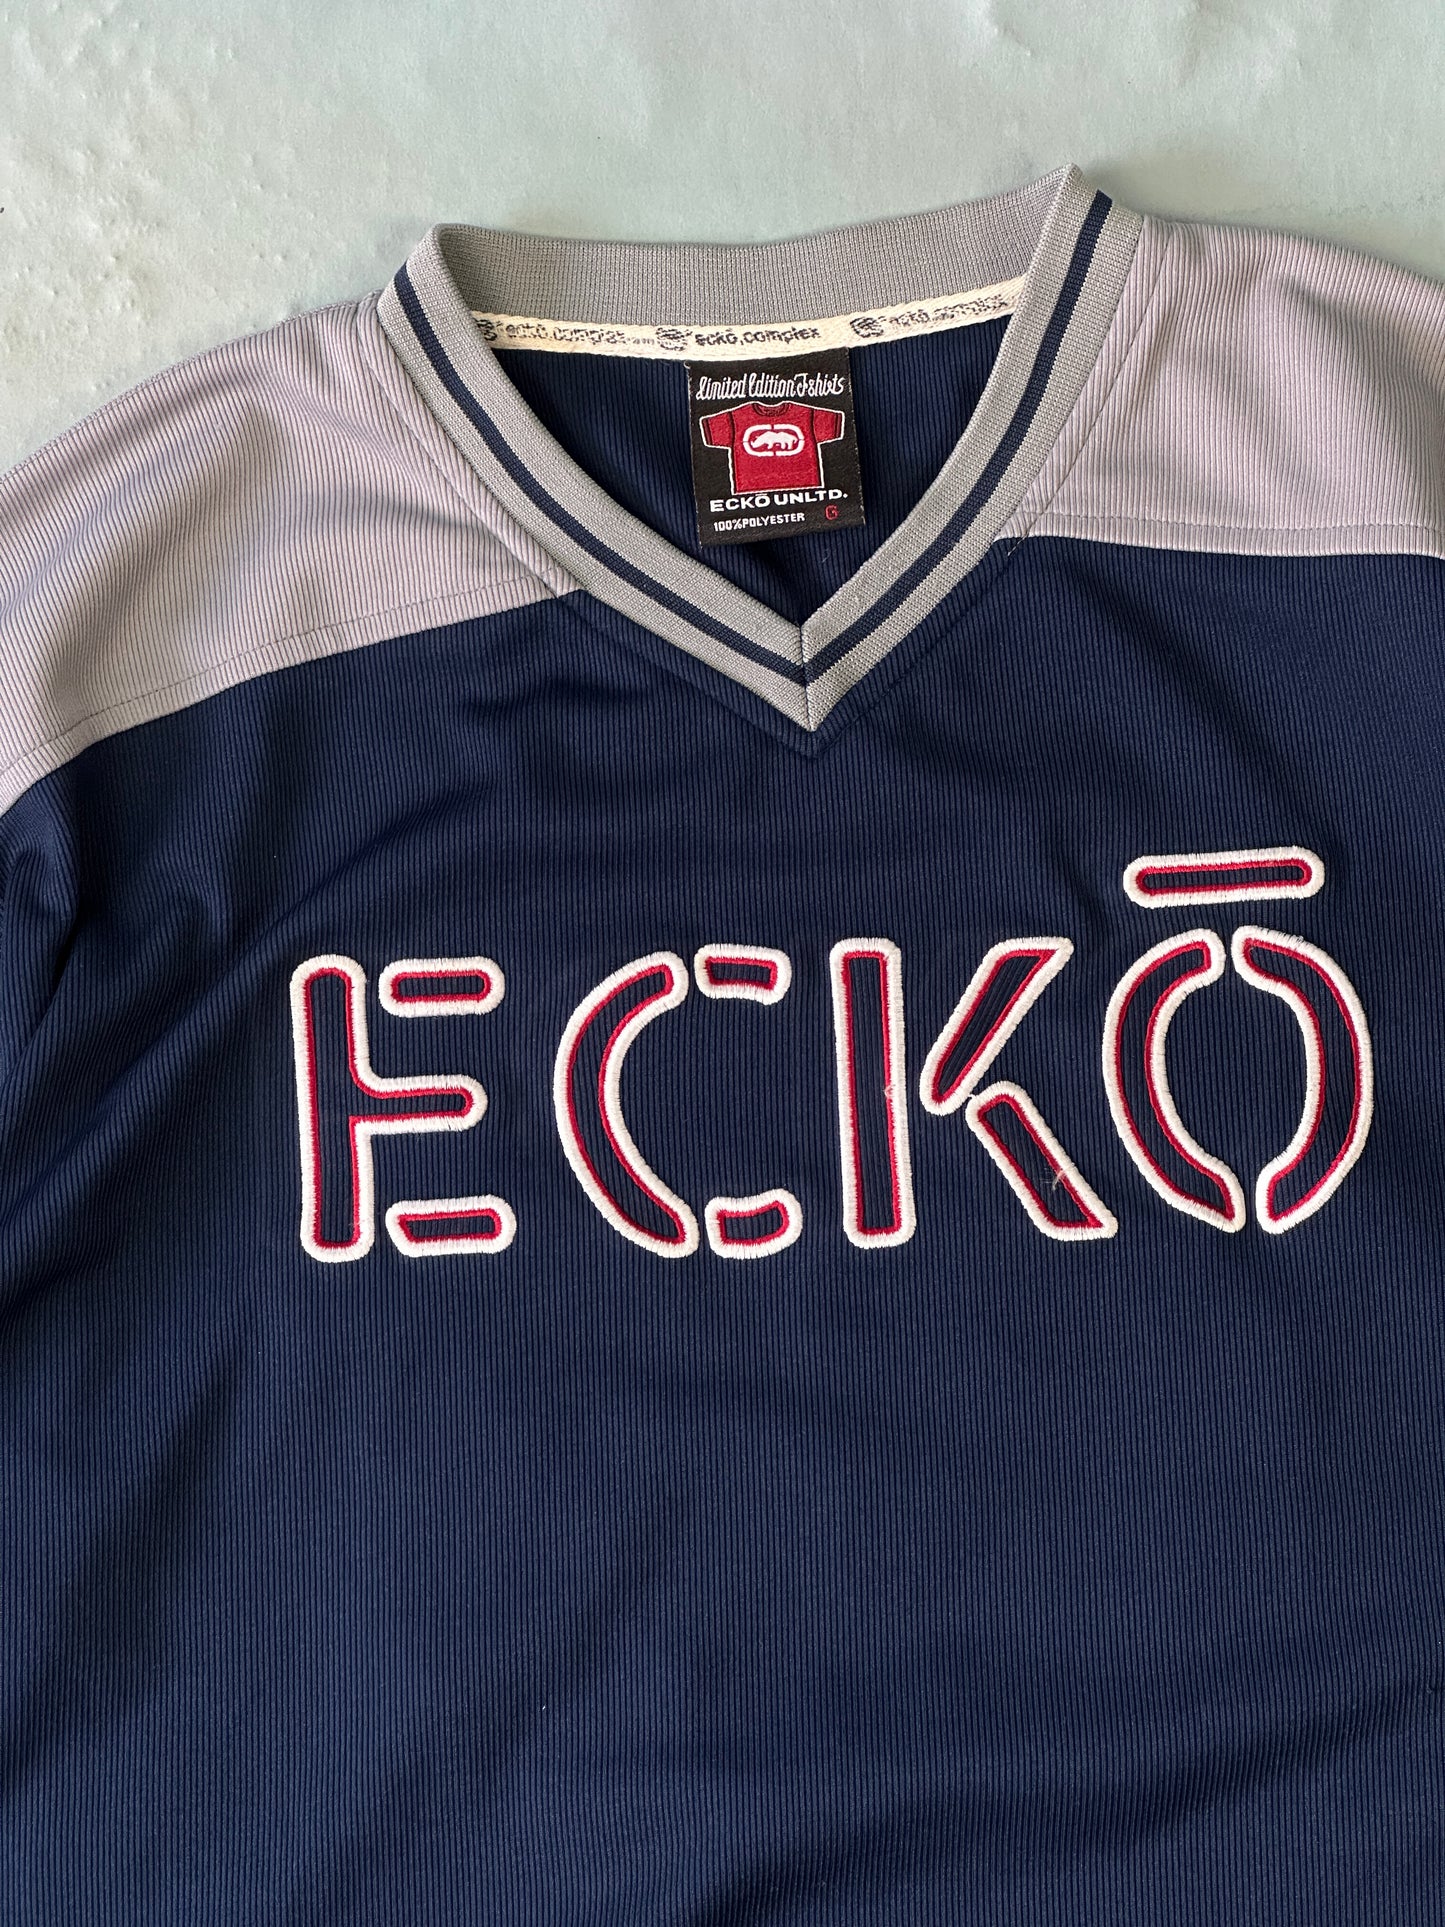 Ecko Unltd. Vintage Jersey - L